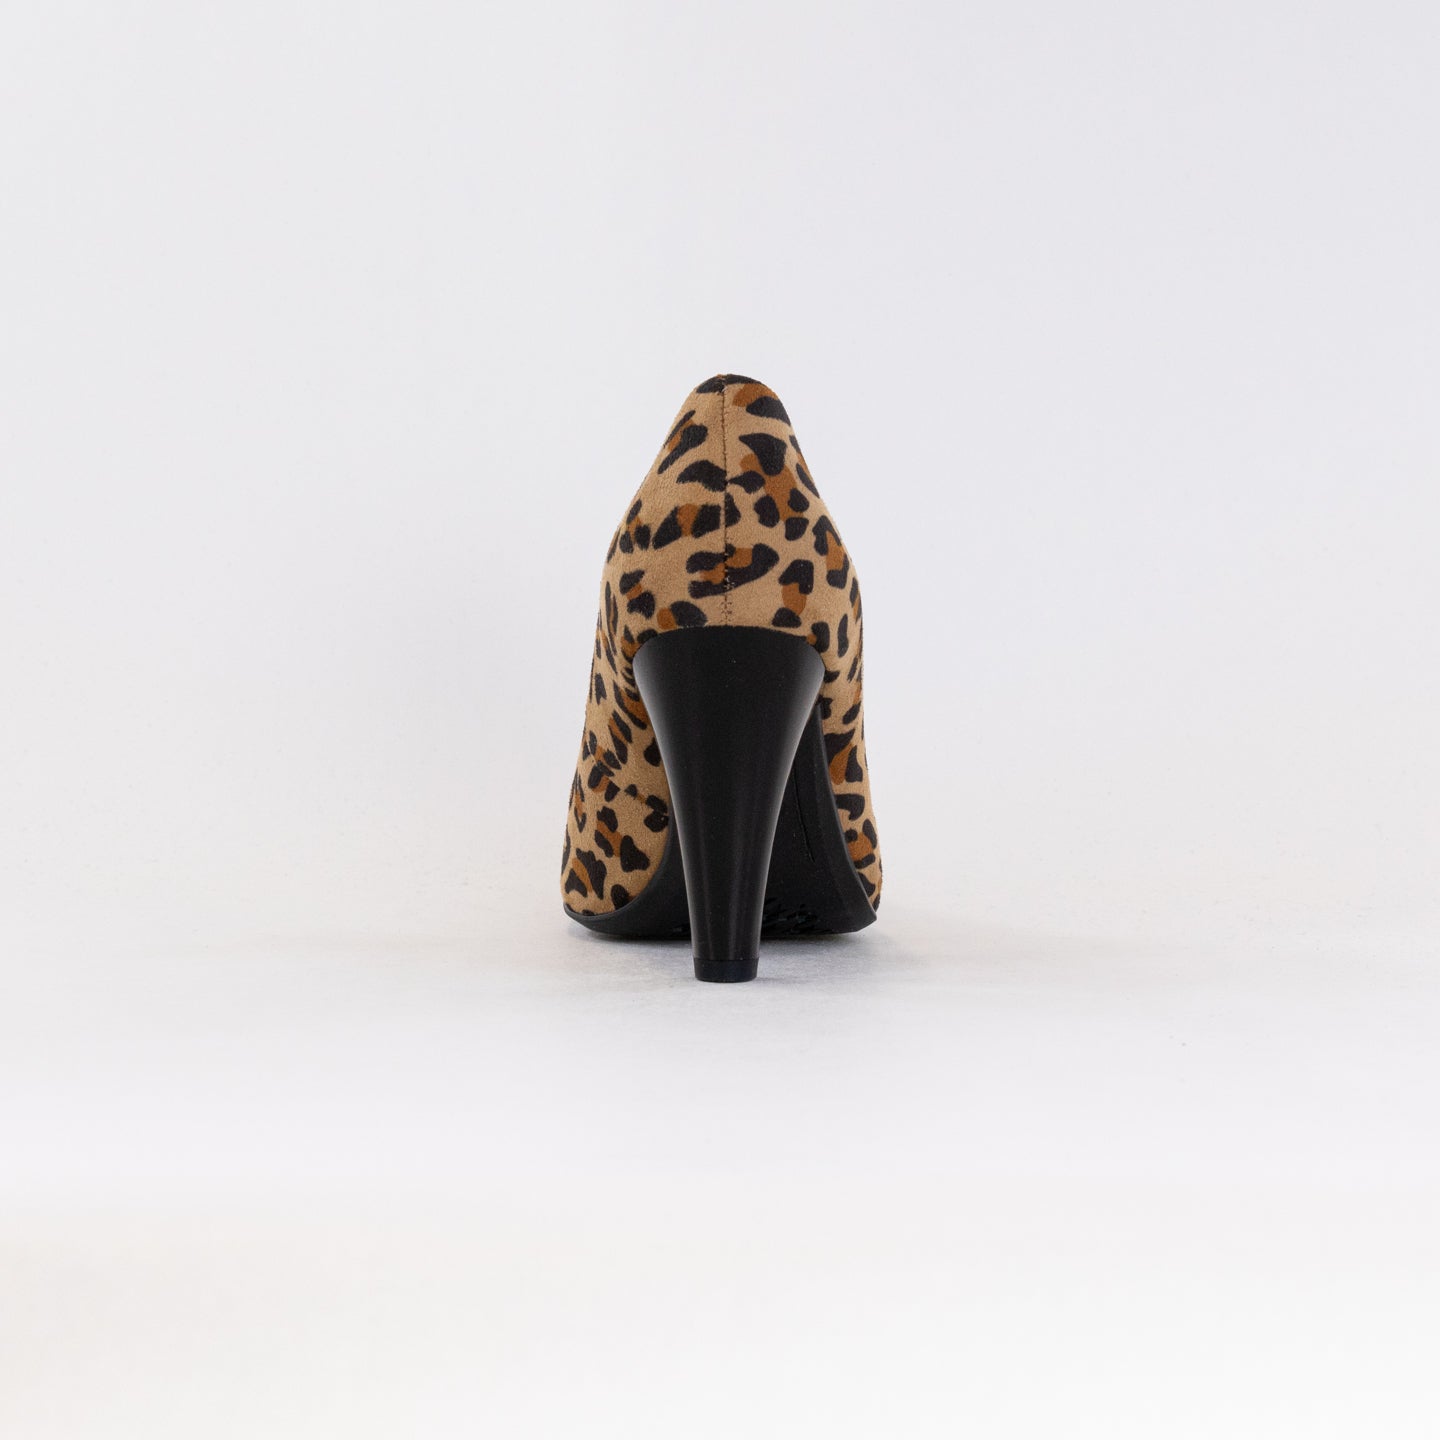 Ara Franziska High Heel Pump (Women's) - Animal Print Leather